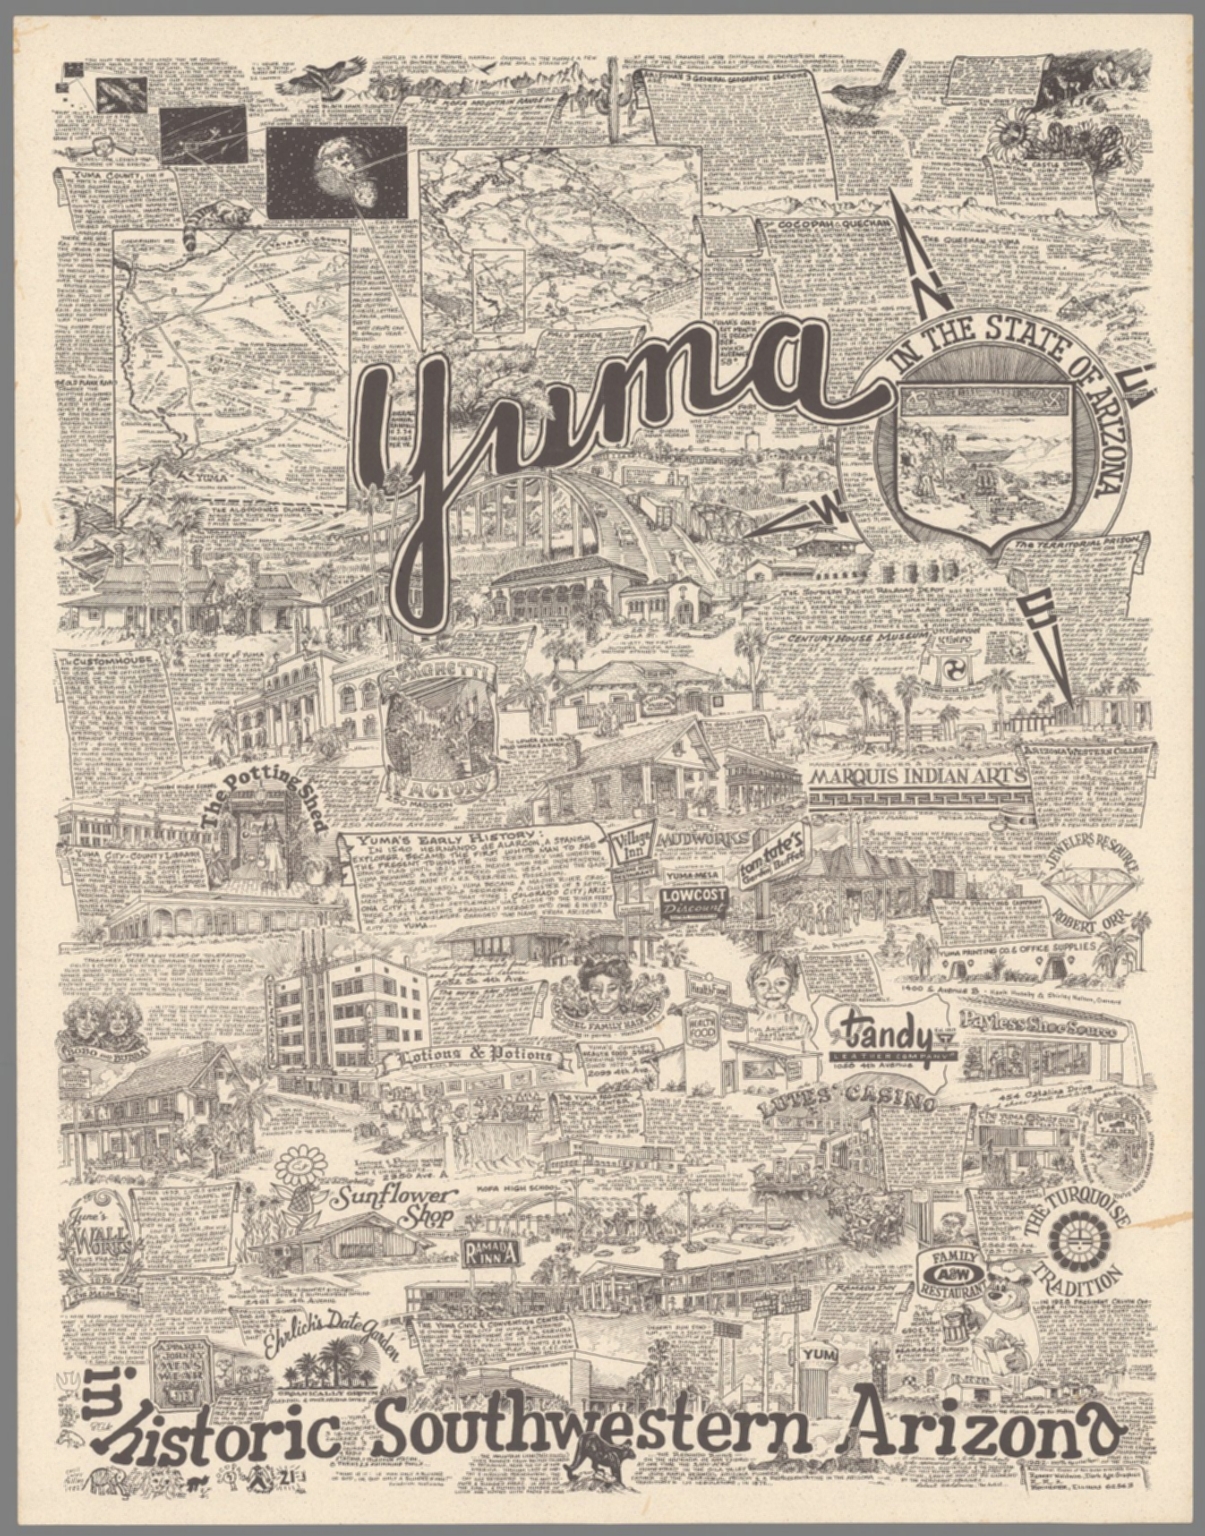 Yuma In Historic Southwestern Arizona David Rumsey Historical Map Collection 6895